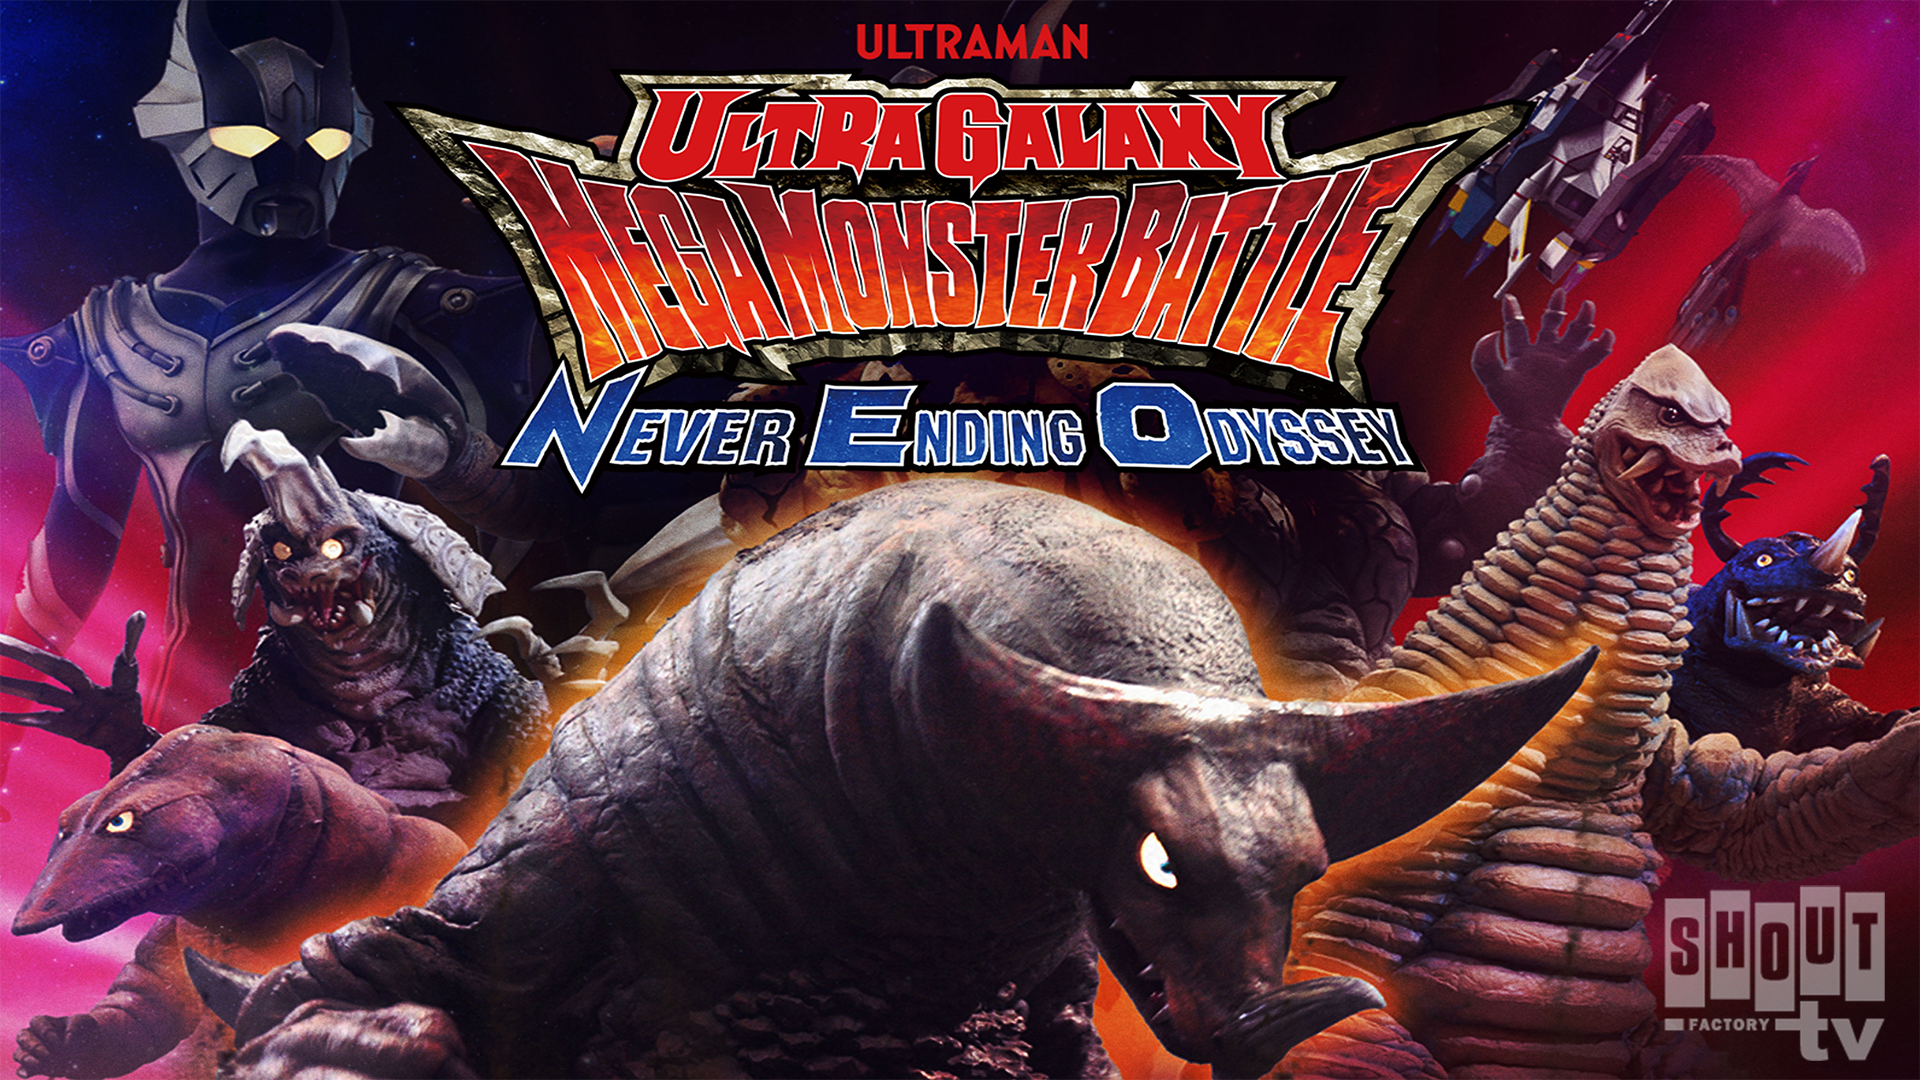 Ultra Galaxy Mega Monster Battle: Never Ending Odyssey